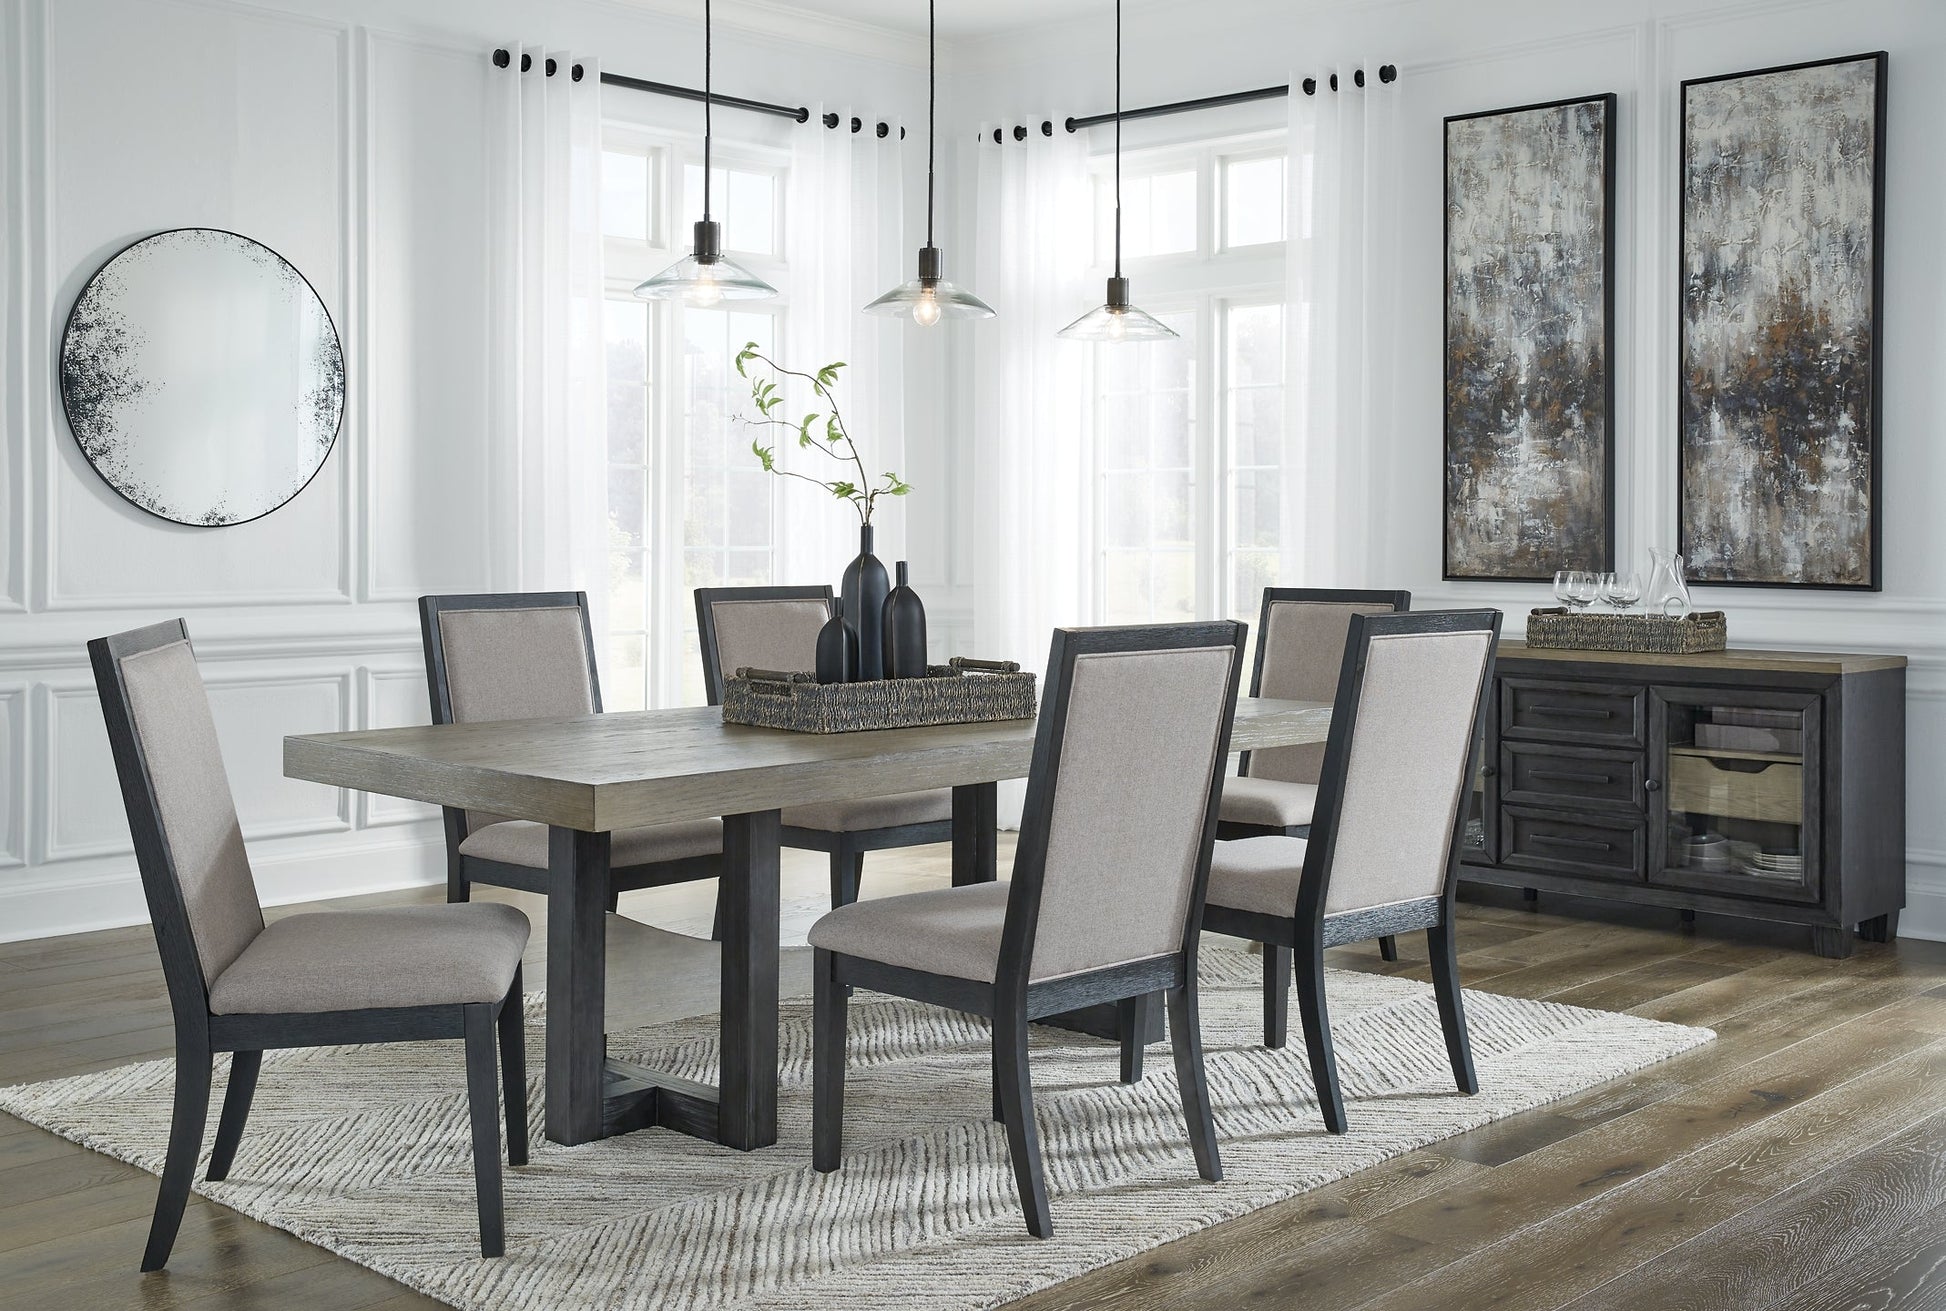 Foyland Rectangular Dining Room Table at Cloud 9 Mattress & Furniture furniture, home furnishing, home decor